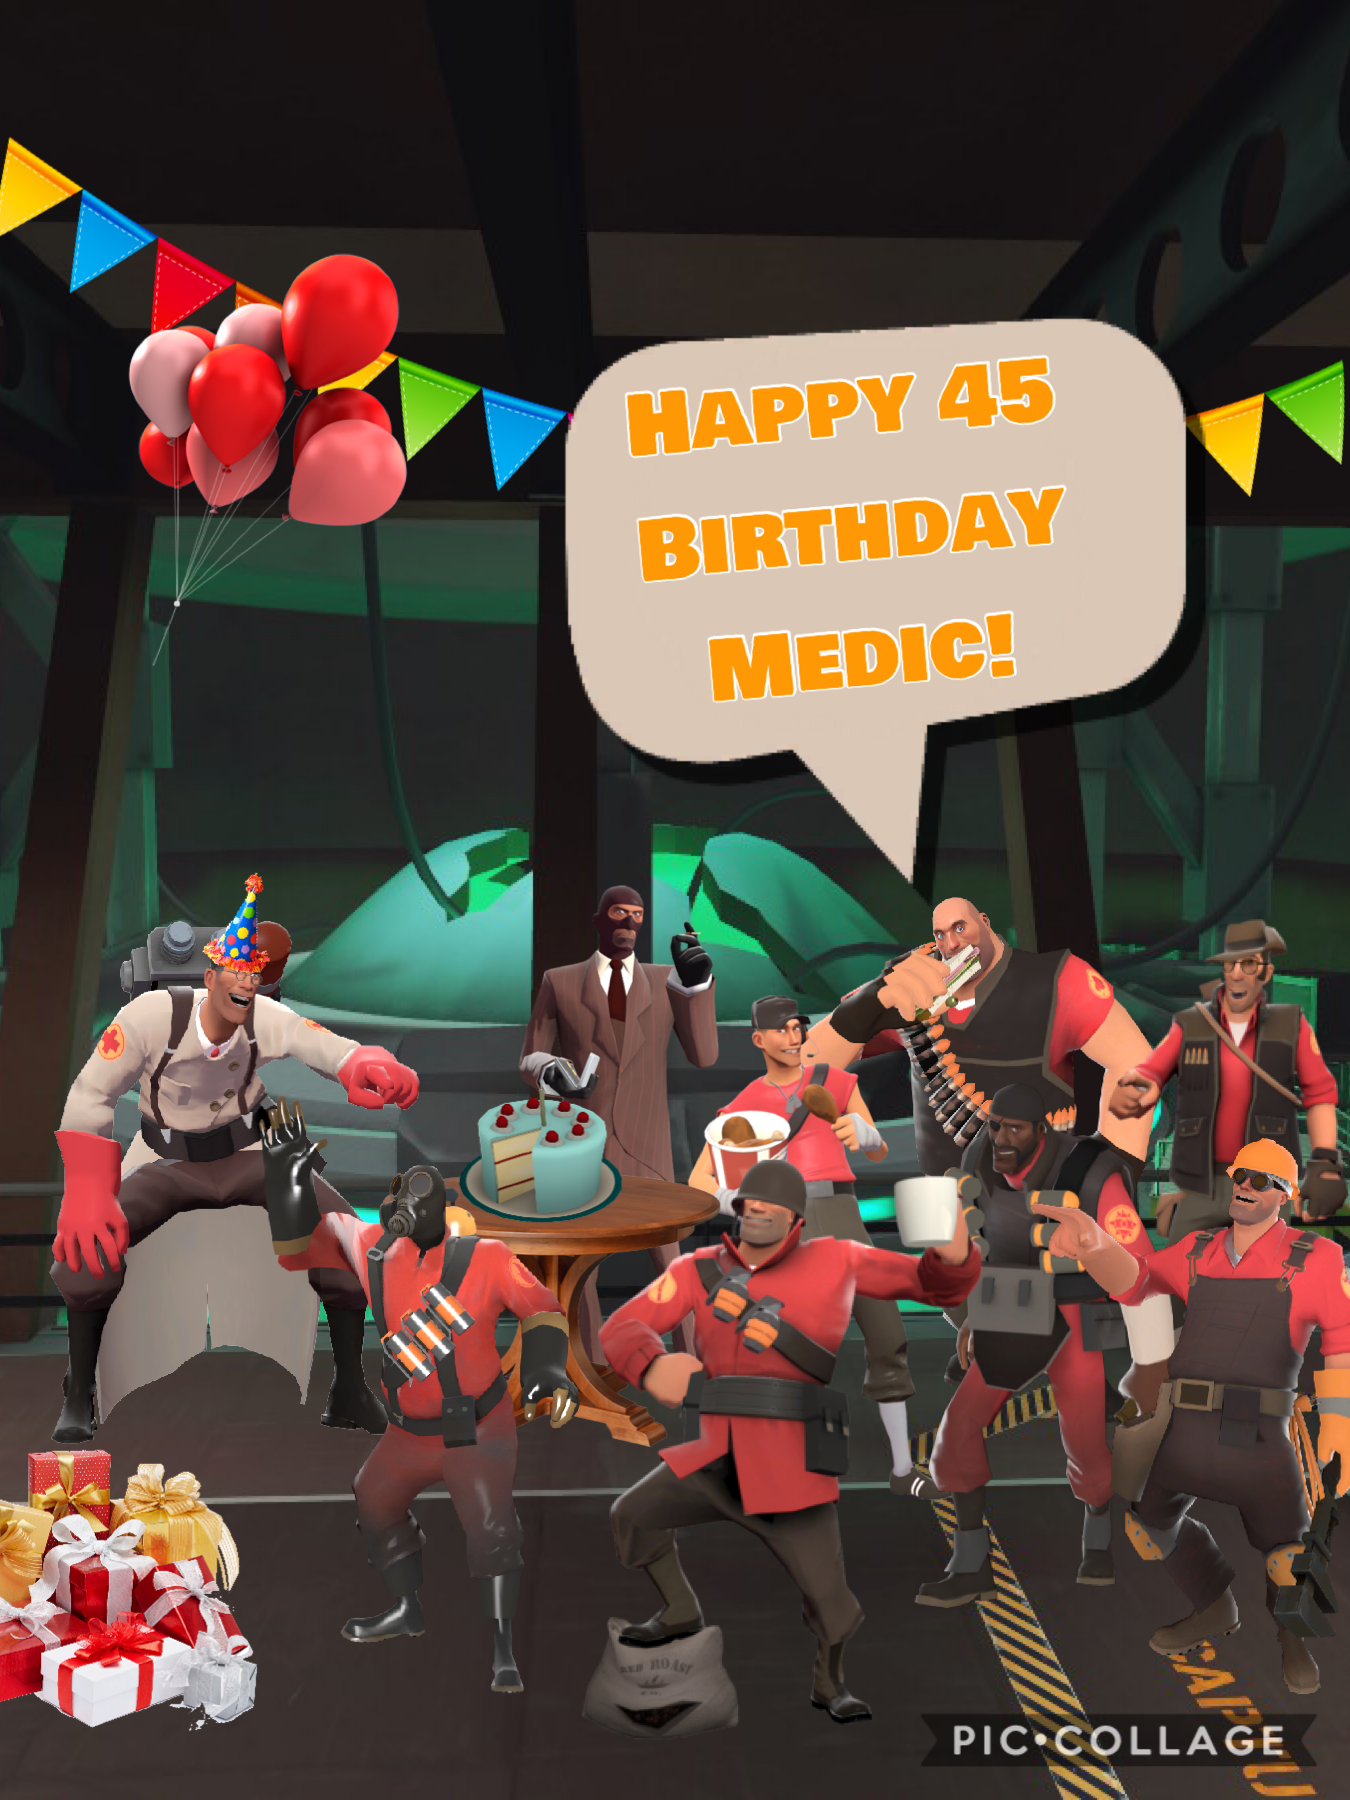 Happy birthday medic!